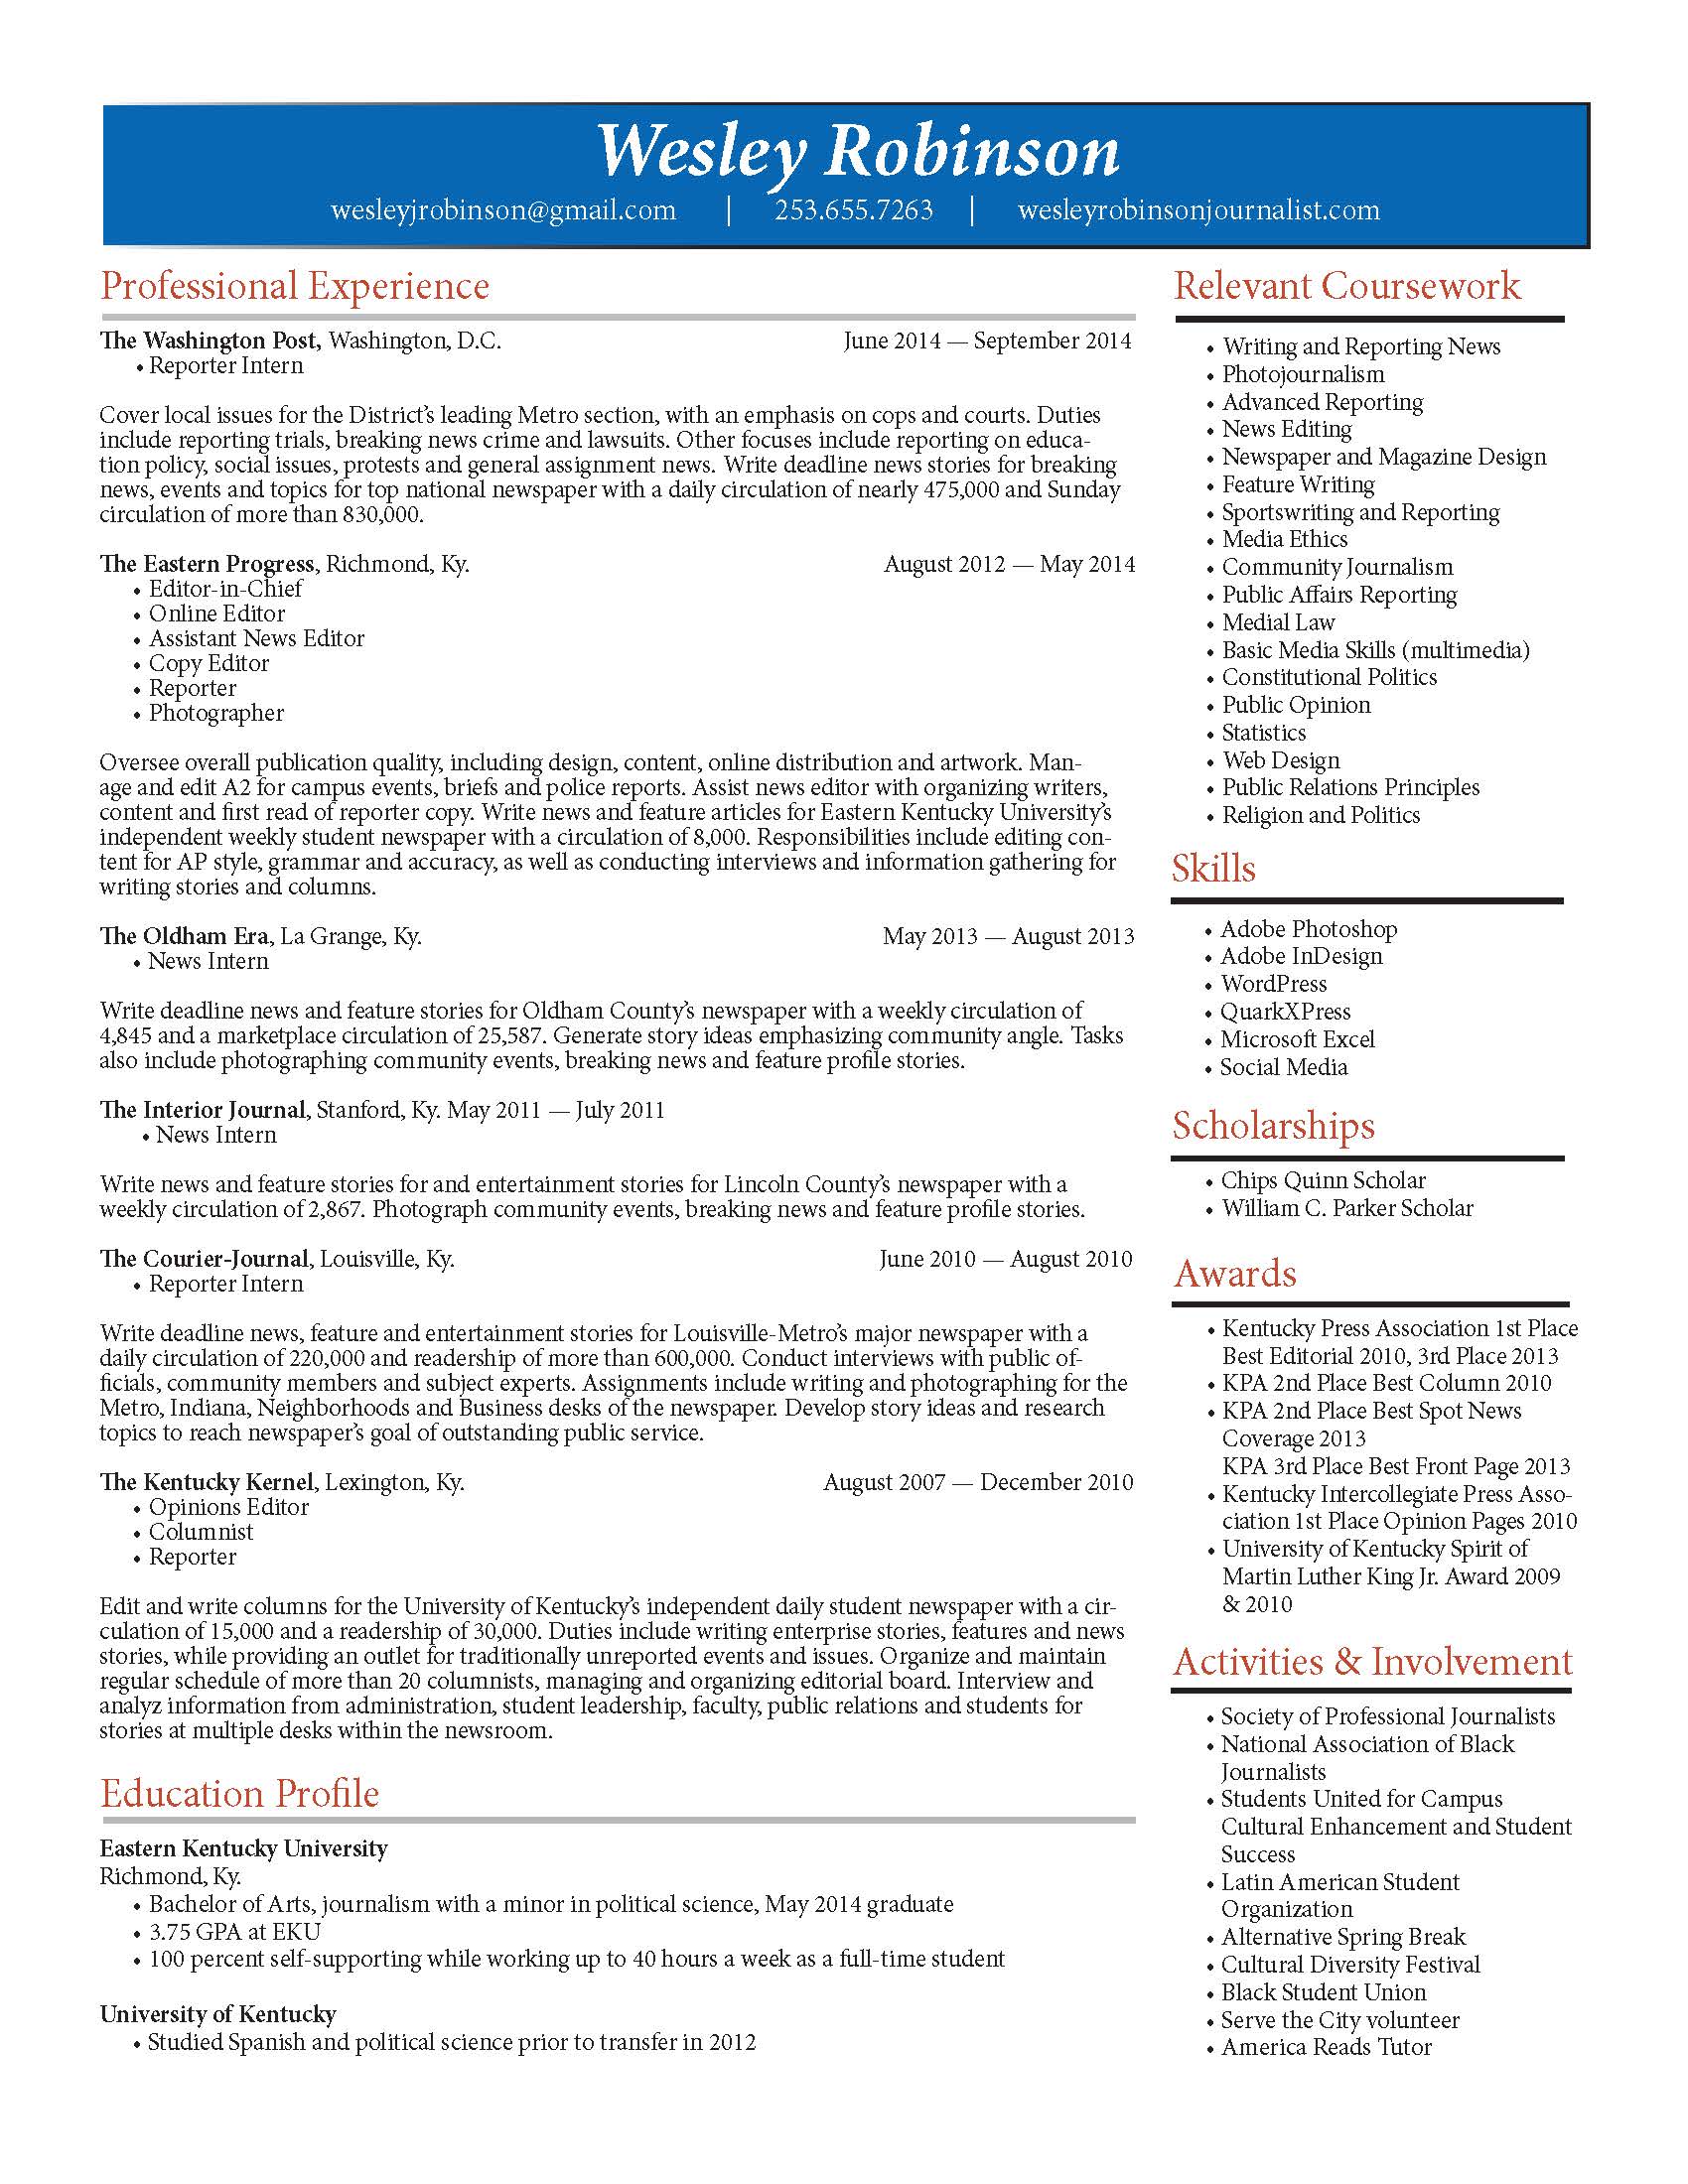 Professional resume writing services portland oregon